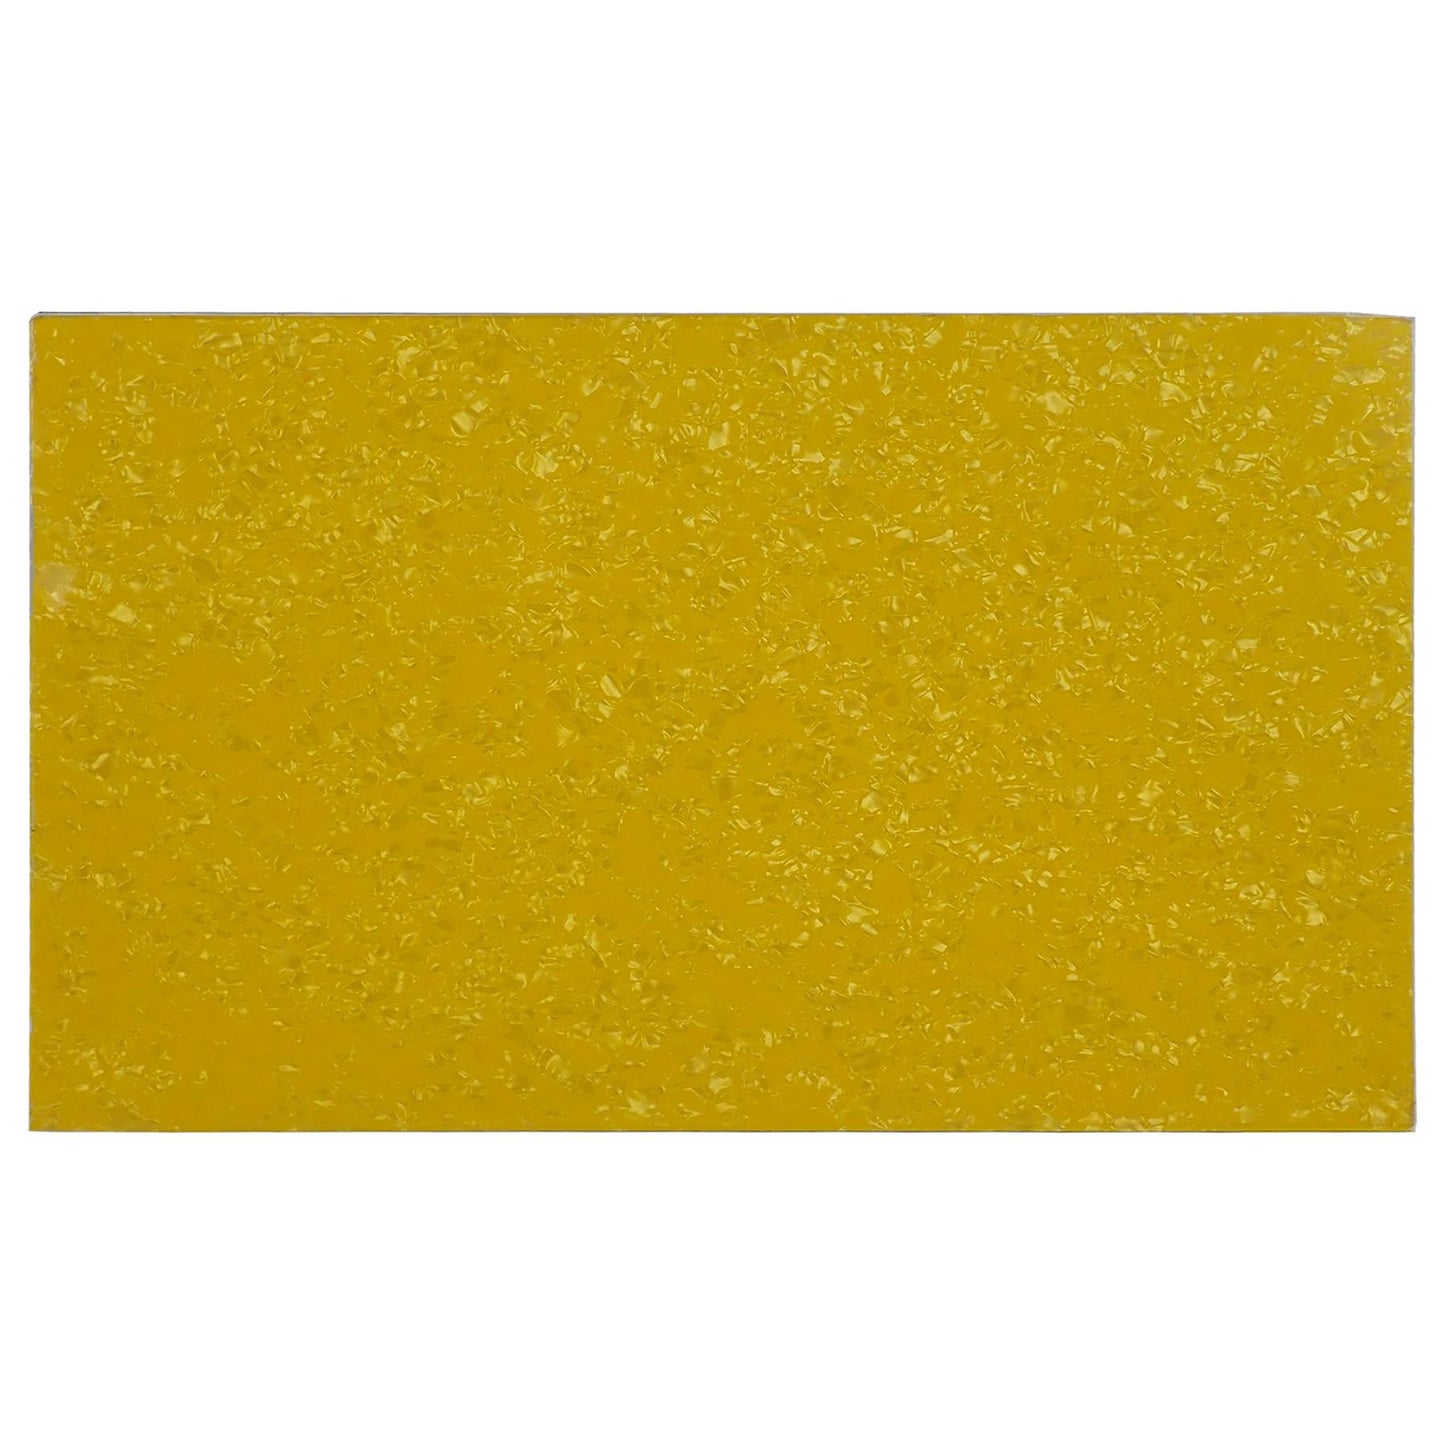 Borderlands Yellow Pearloid PVC Sheet - 430x290x2.5mm 4-Ply